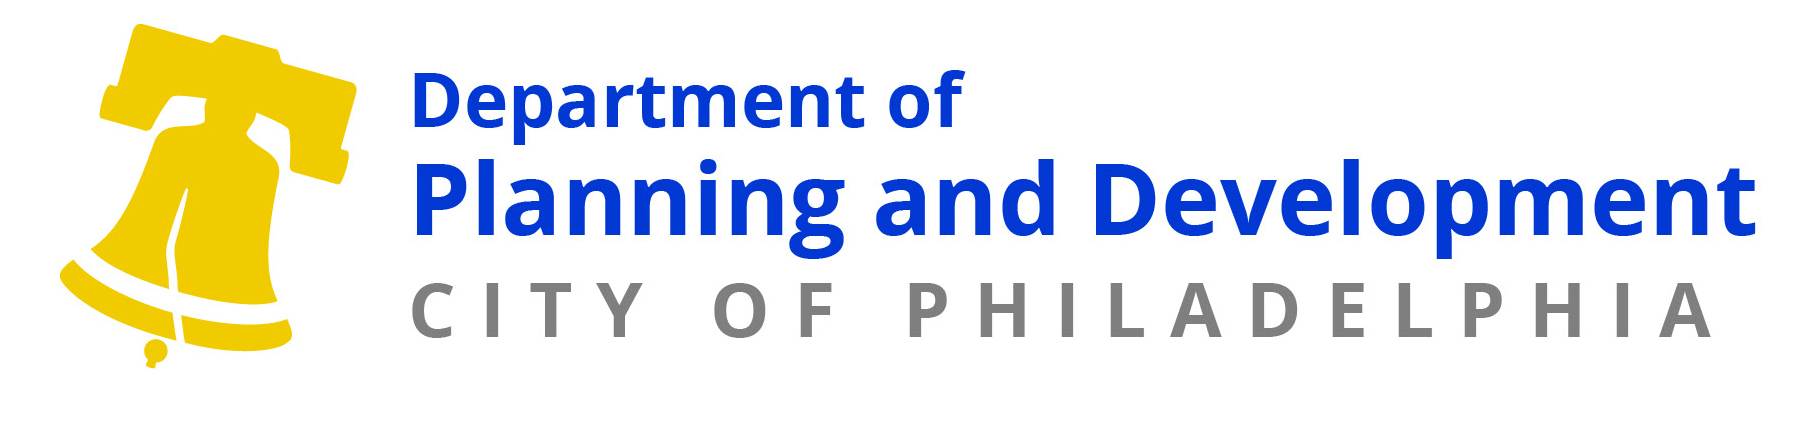 Dept. of Planning and Development Logo